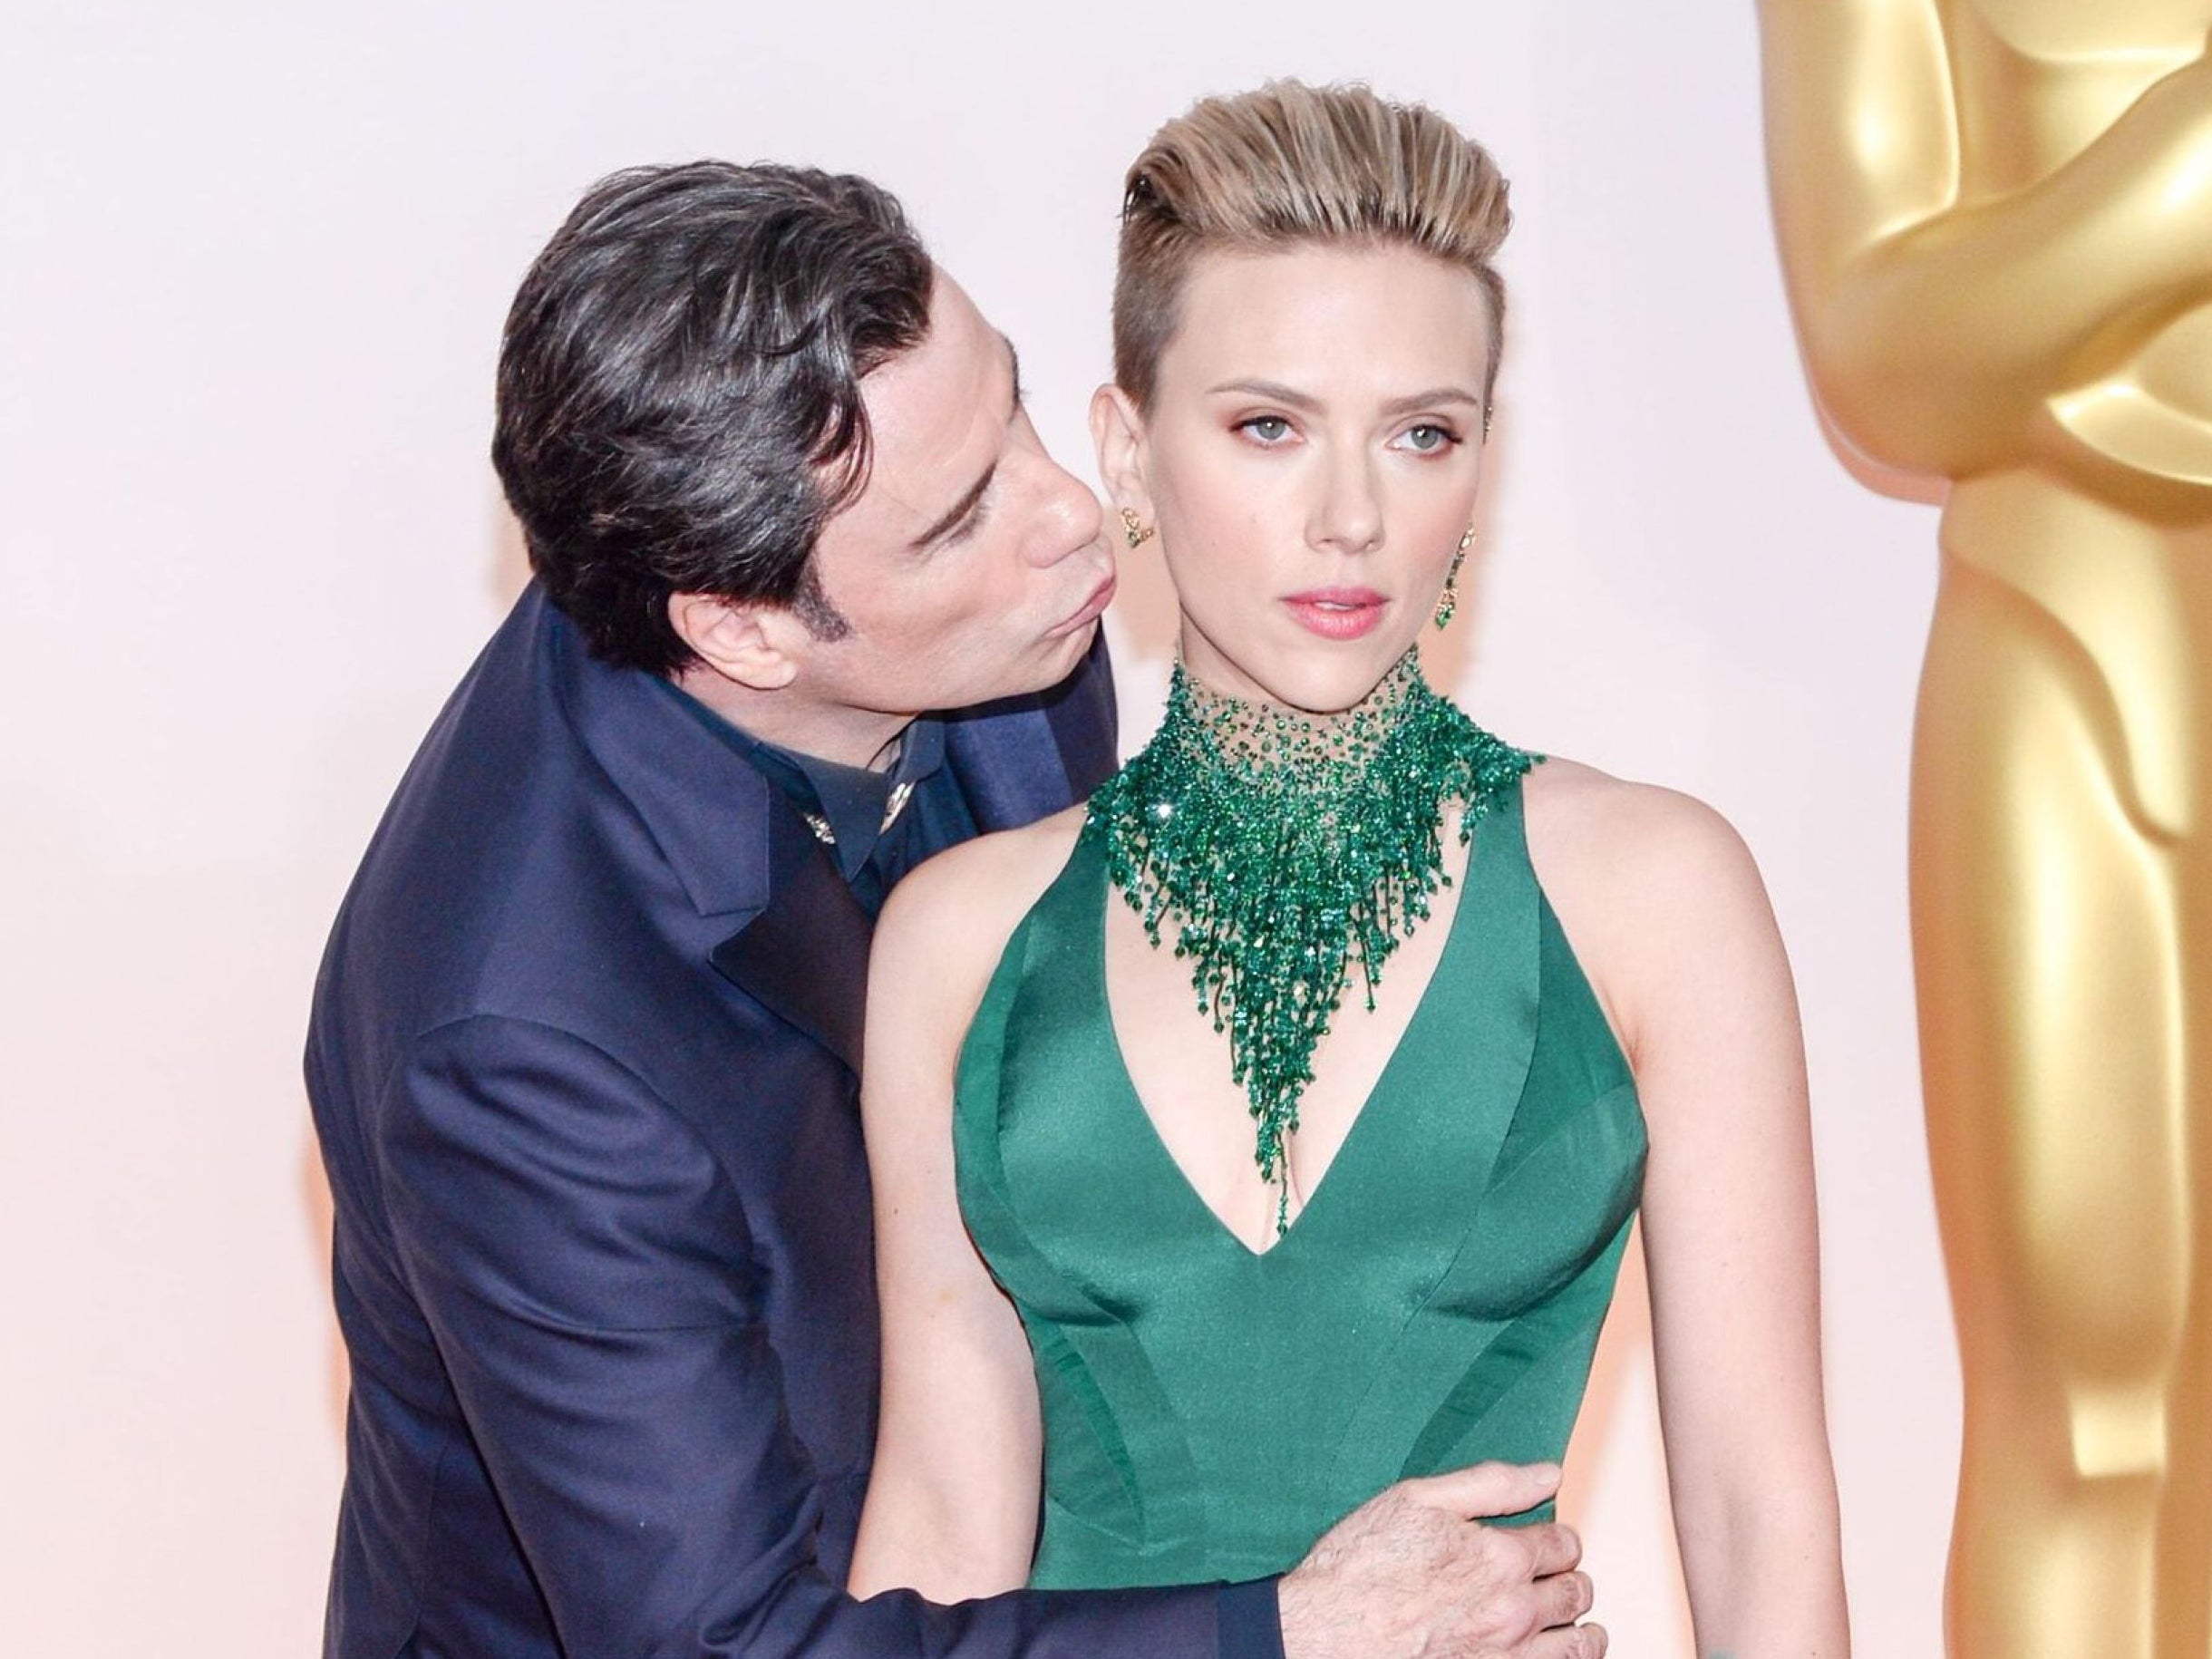 Johansson didn't look delighted by Travolta's handsy display